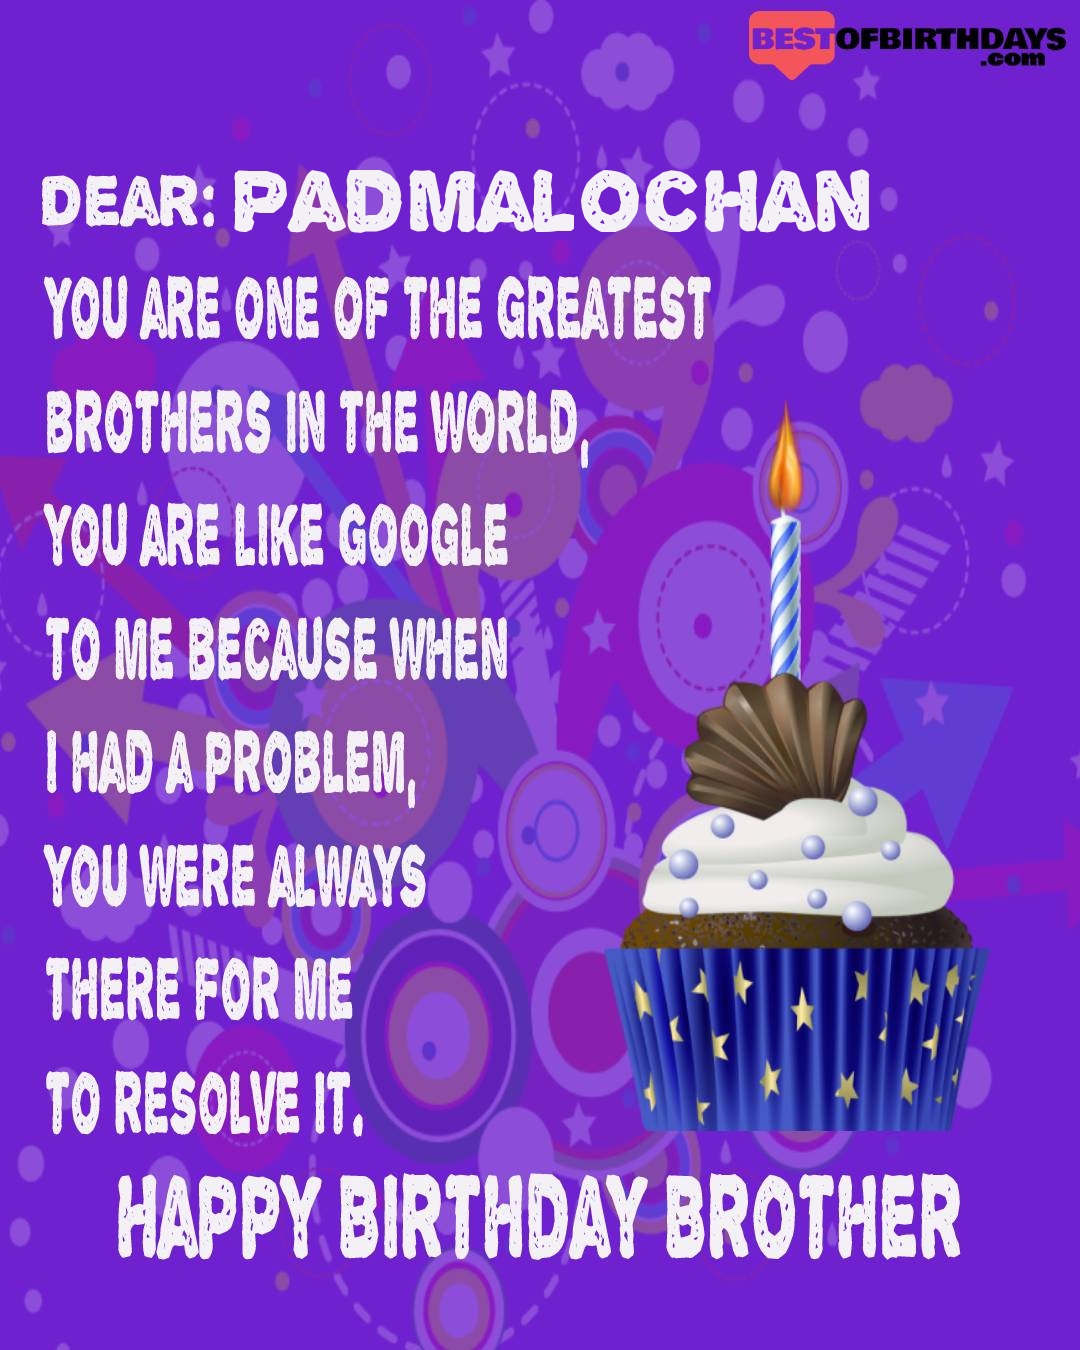 Happy birthday padmalochan bhai brother bro